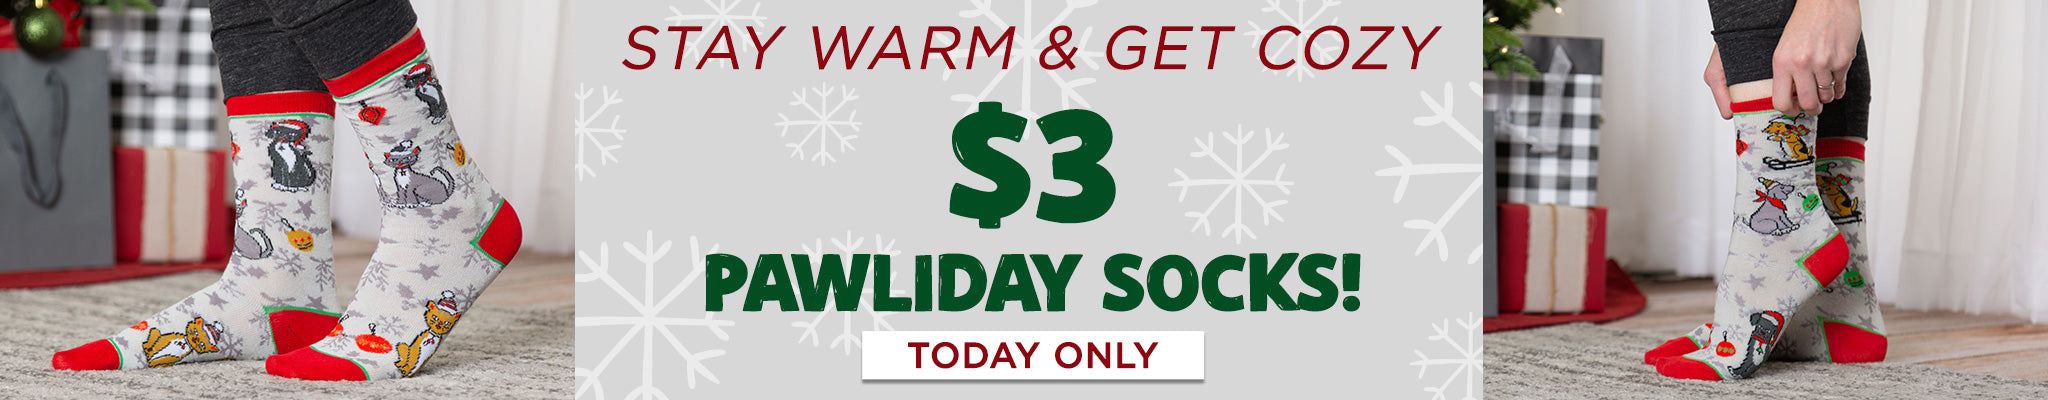 Stay Warm & Get Cozy | $3 Pawliday Socks